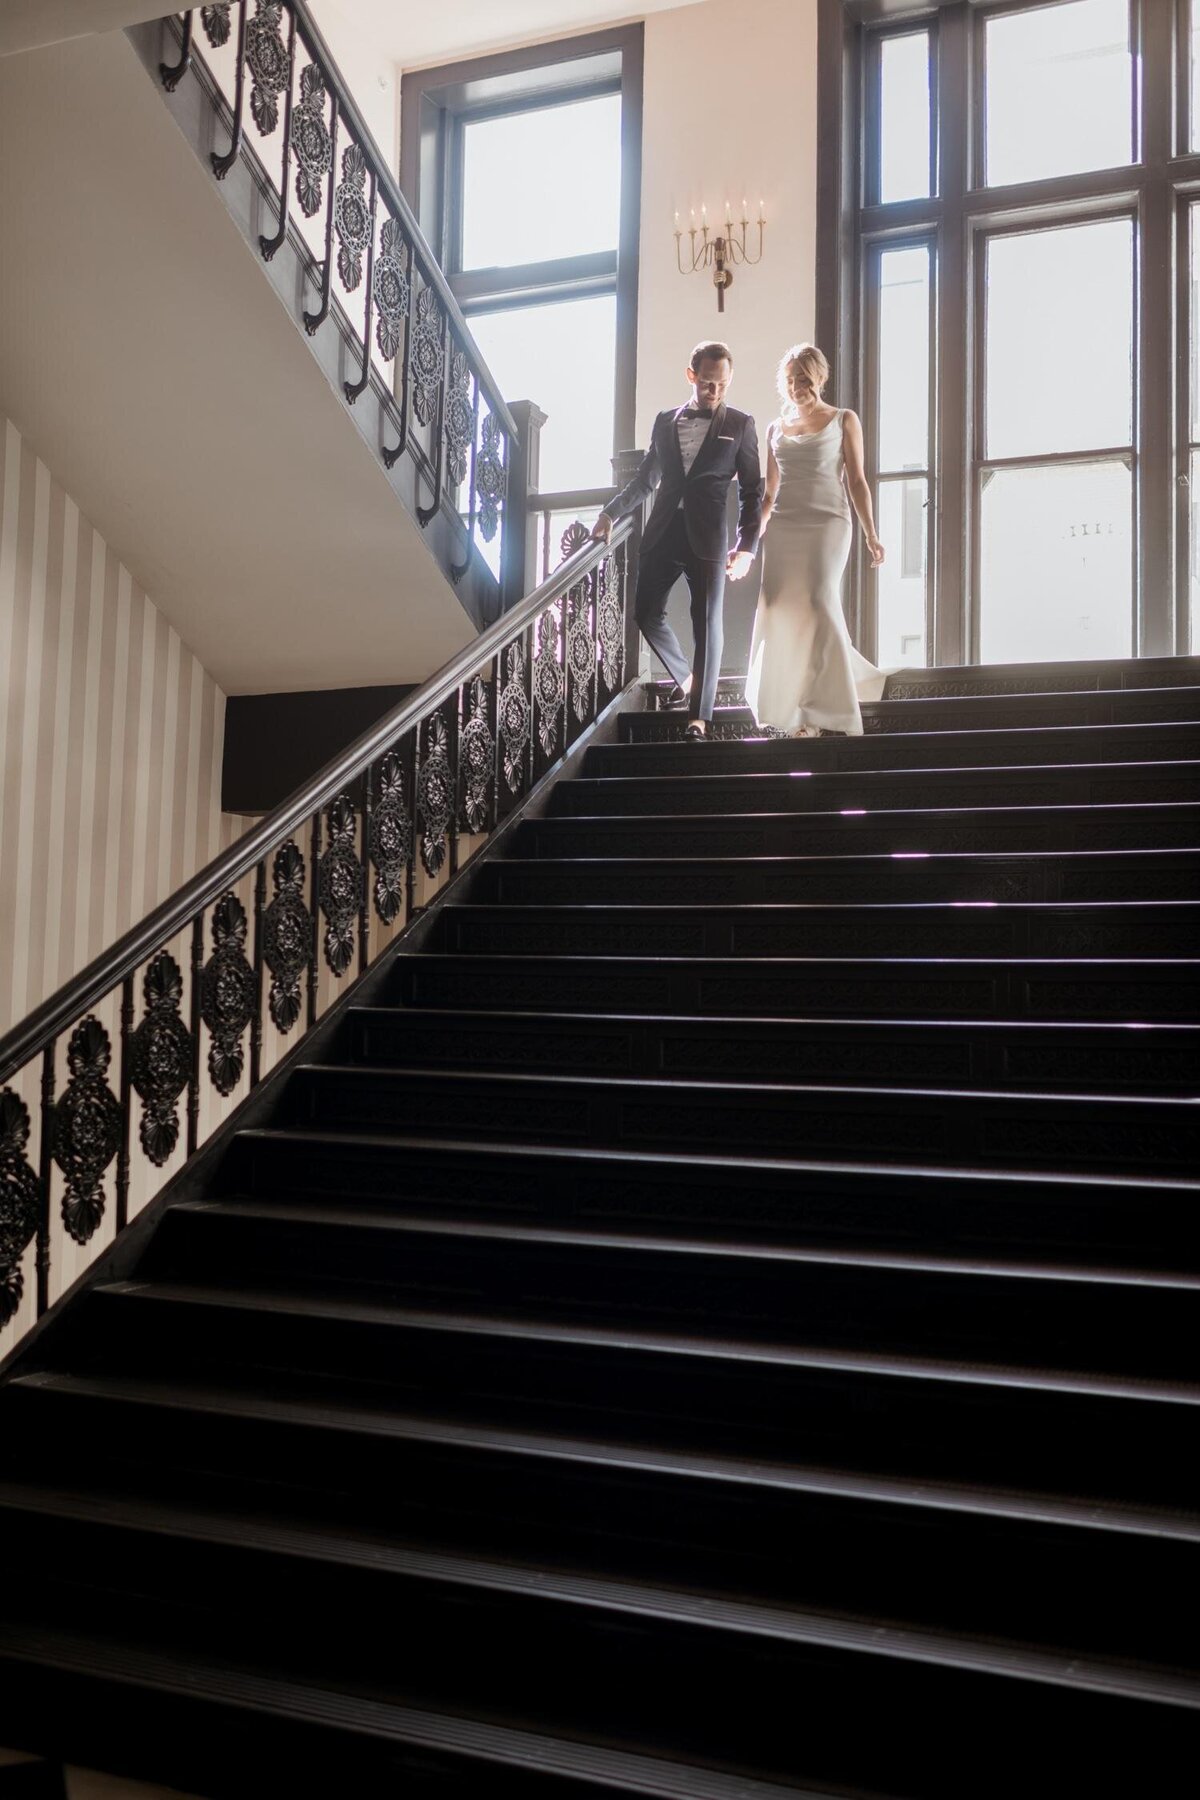 Bride-and-Groom-Walking-down-stair-case-maison-de-la-luz-hotel-New-Orleans.jpg